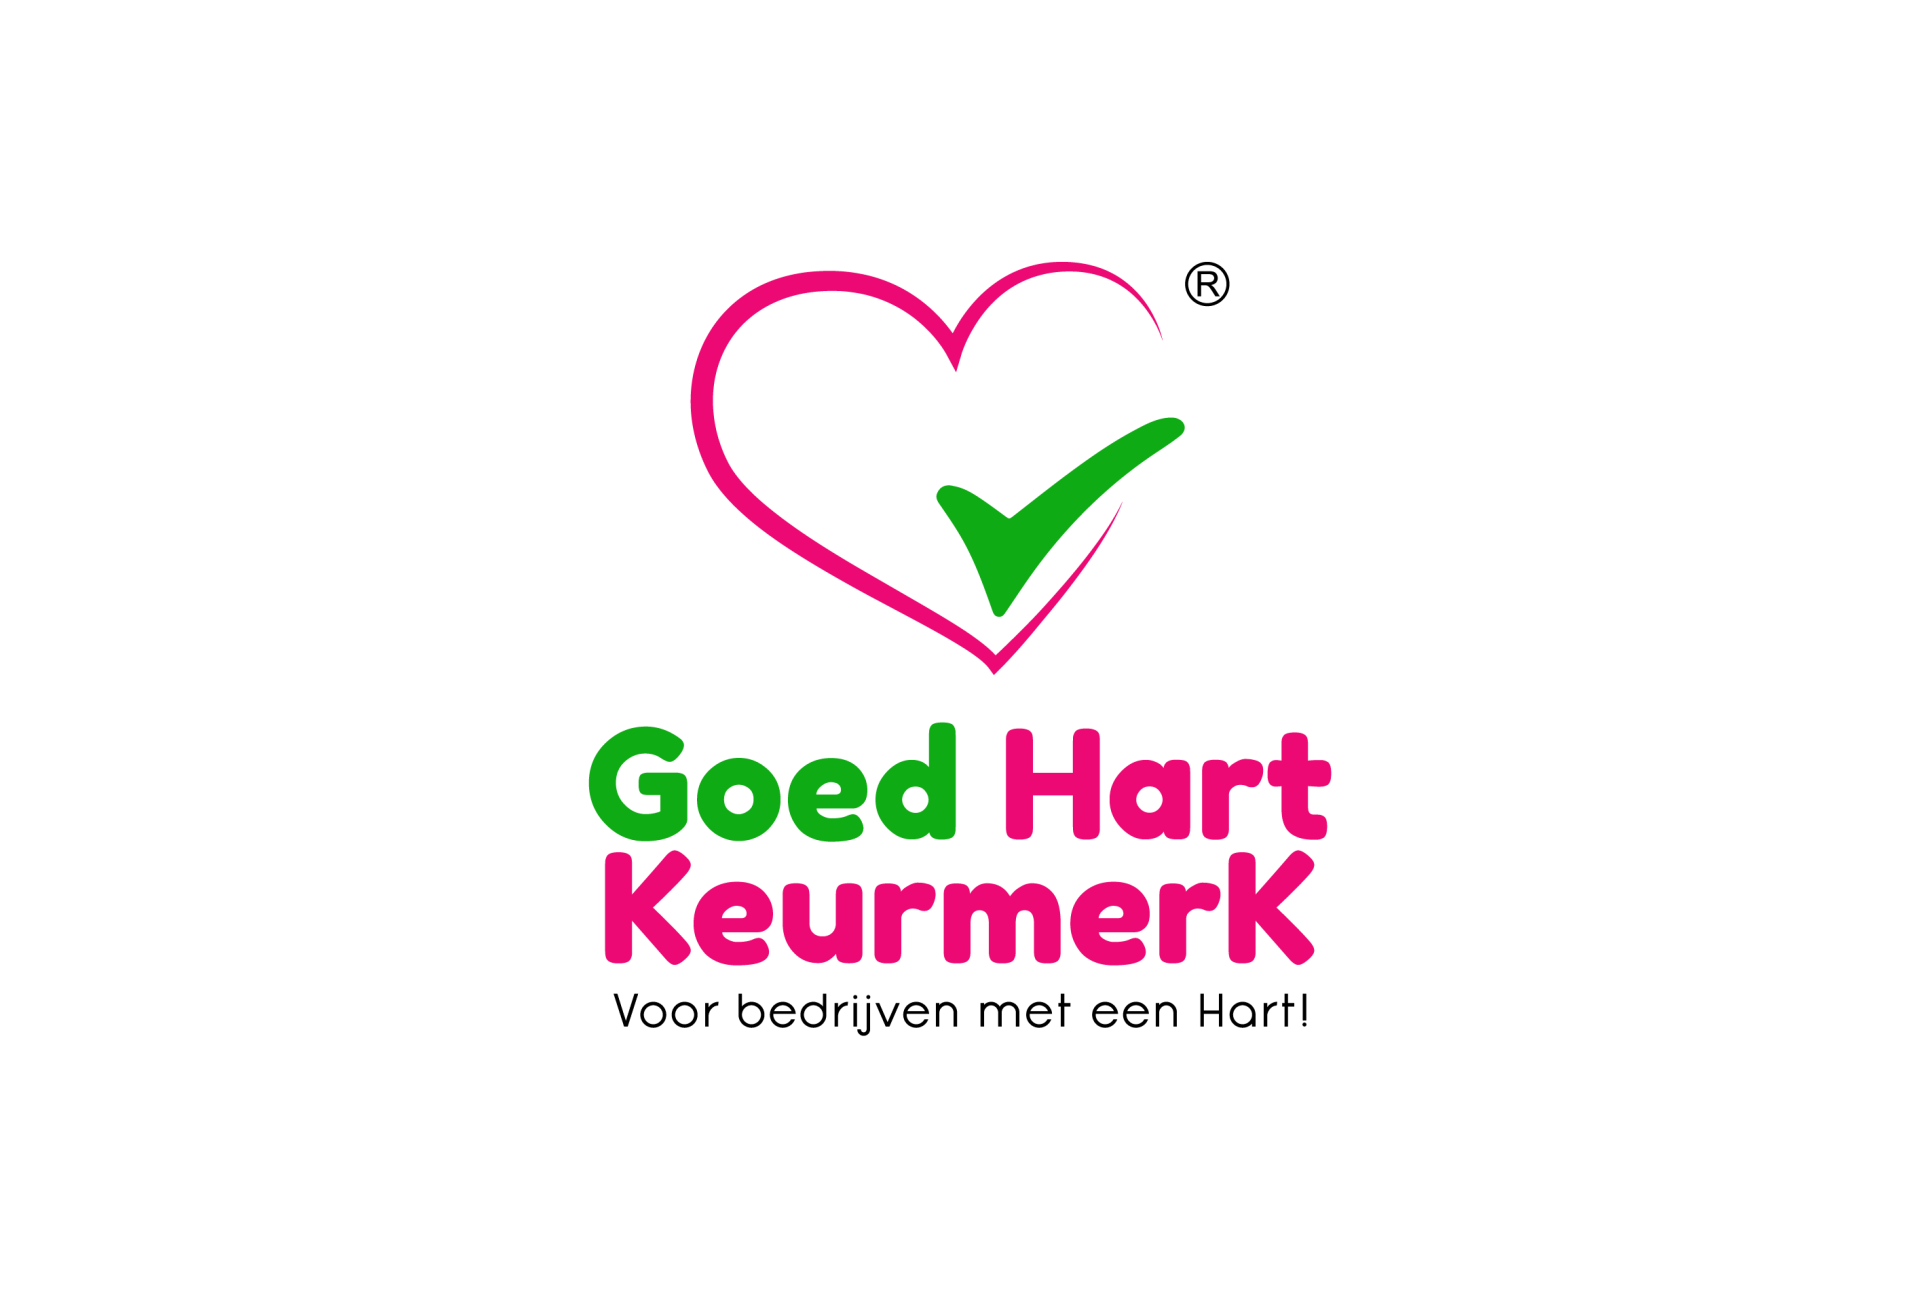 A logo for a company called goed hart keurmerk